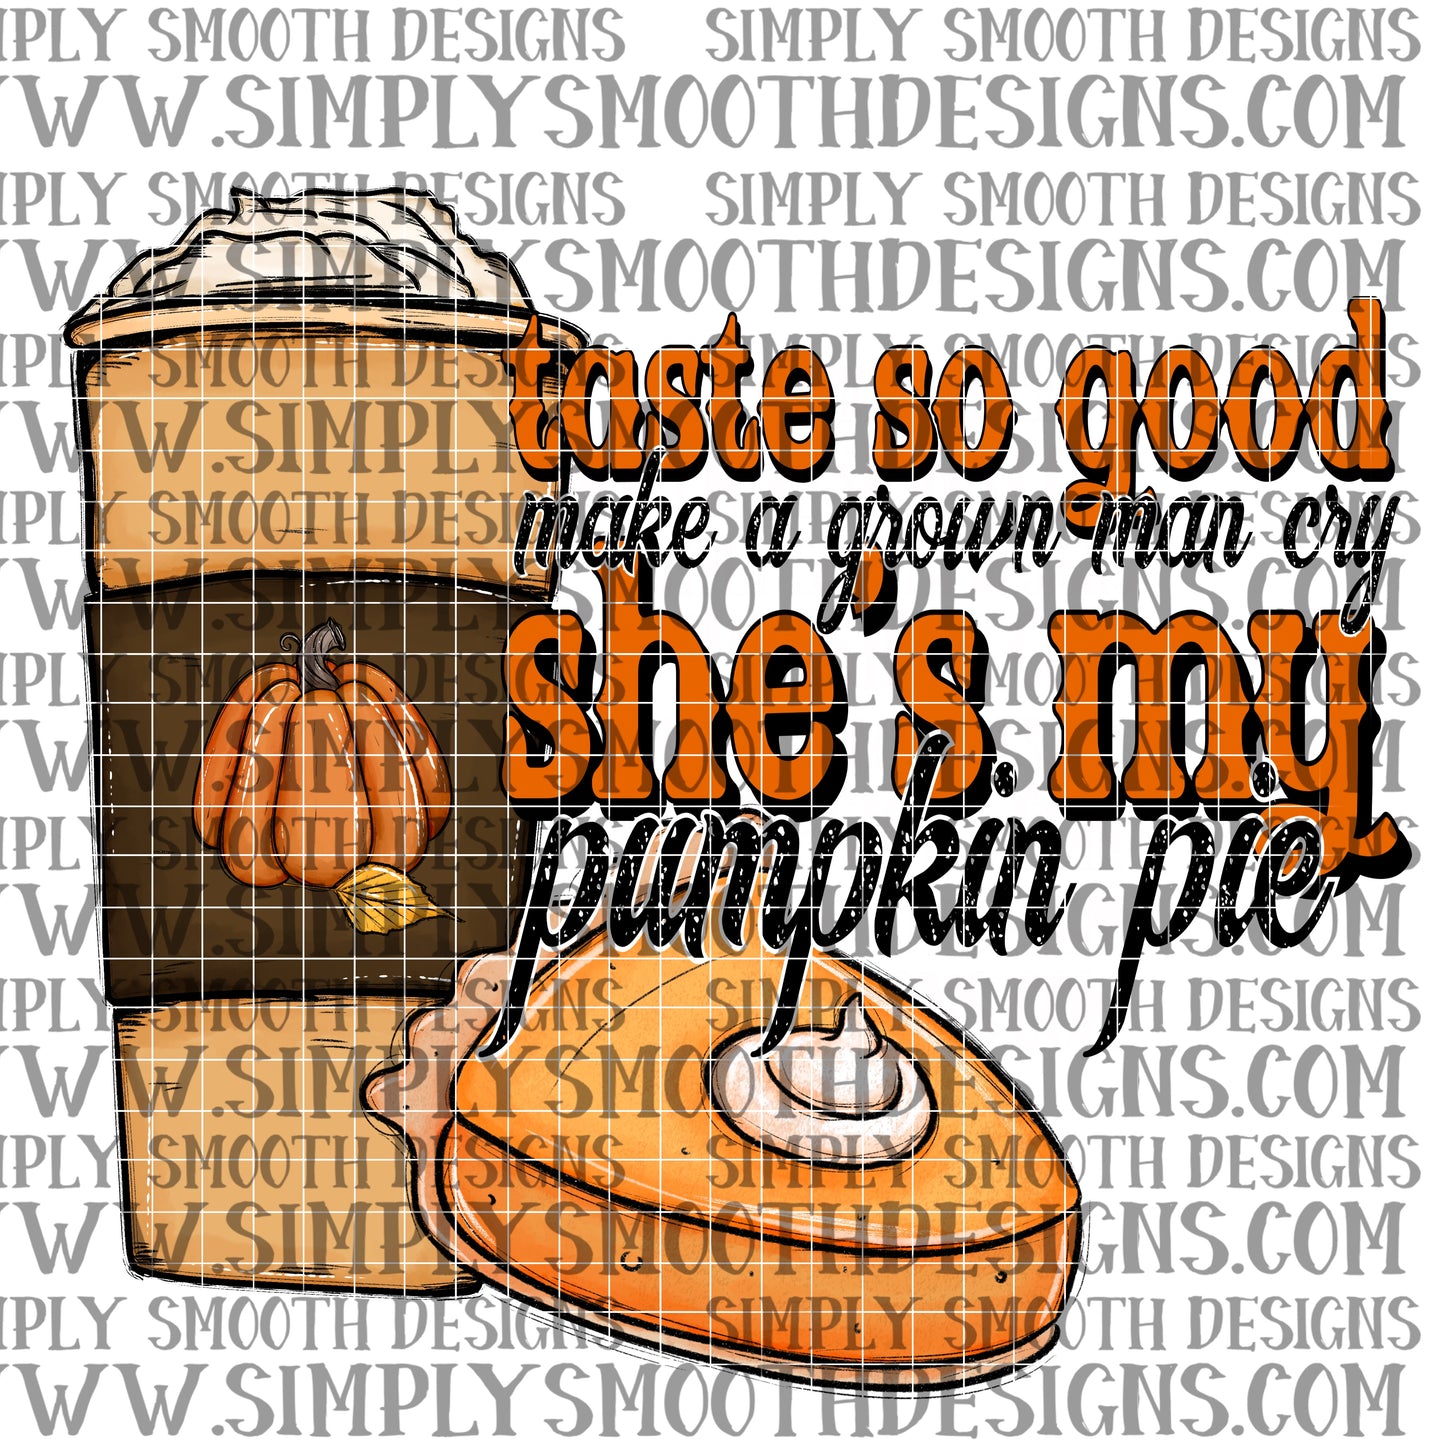 She’s my pumpkin pie